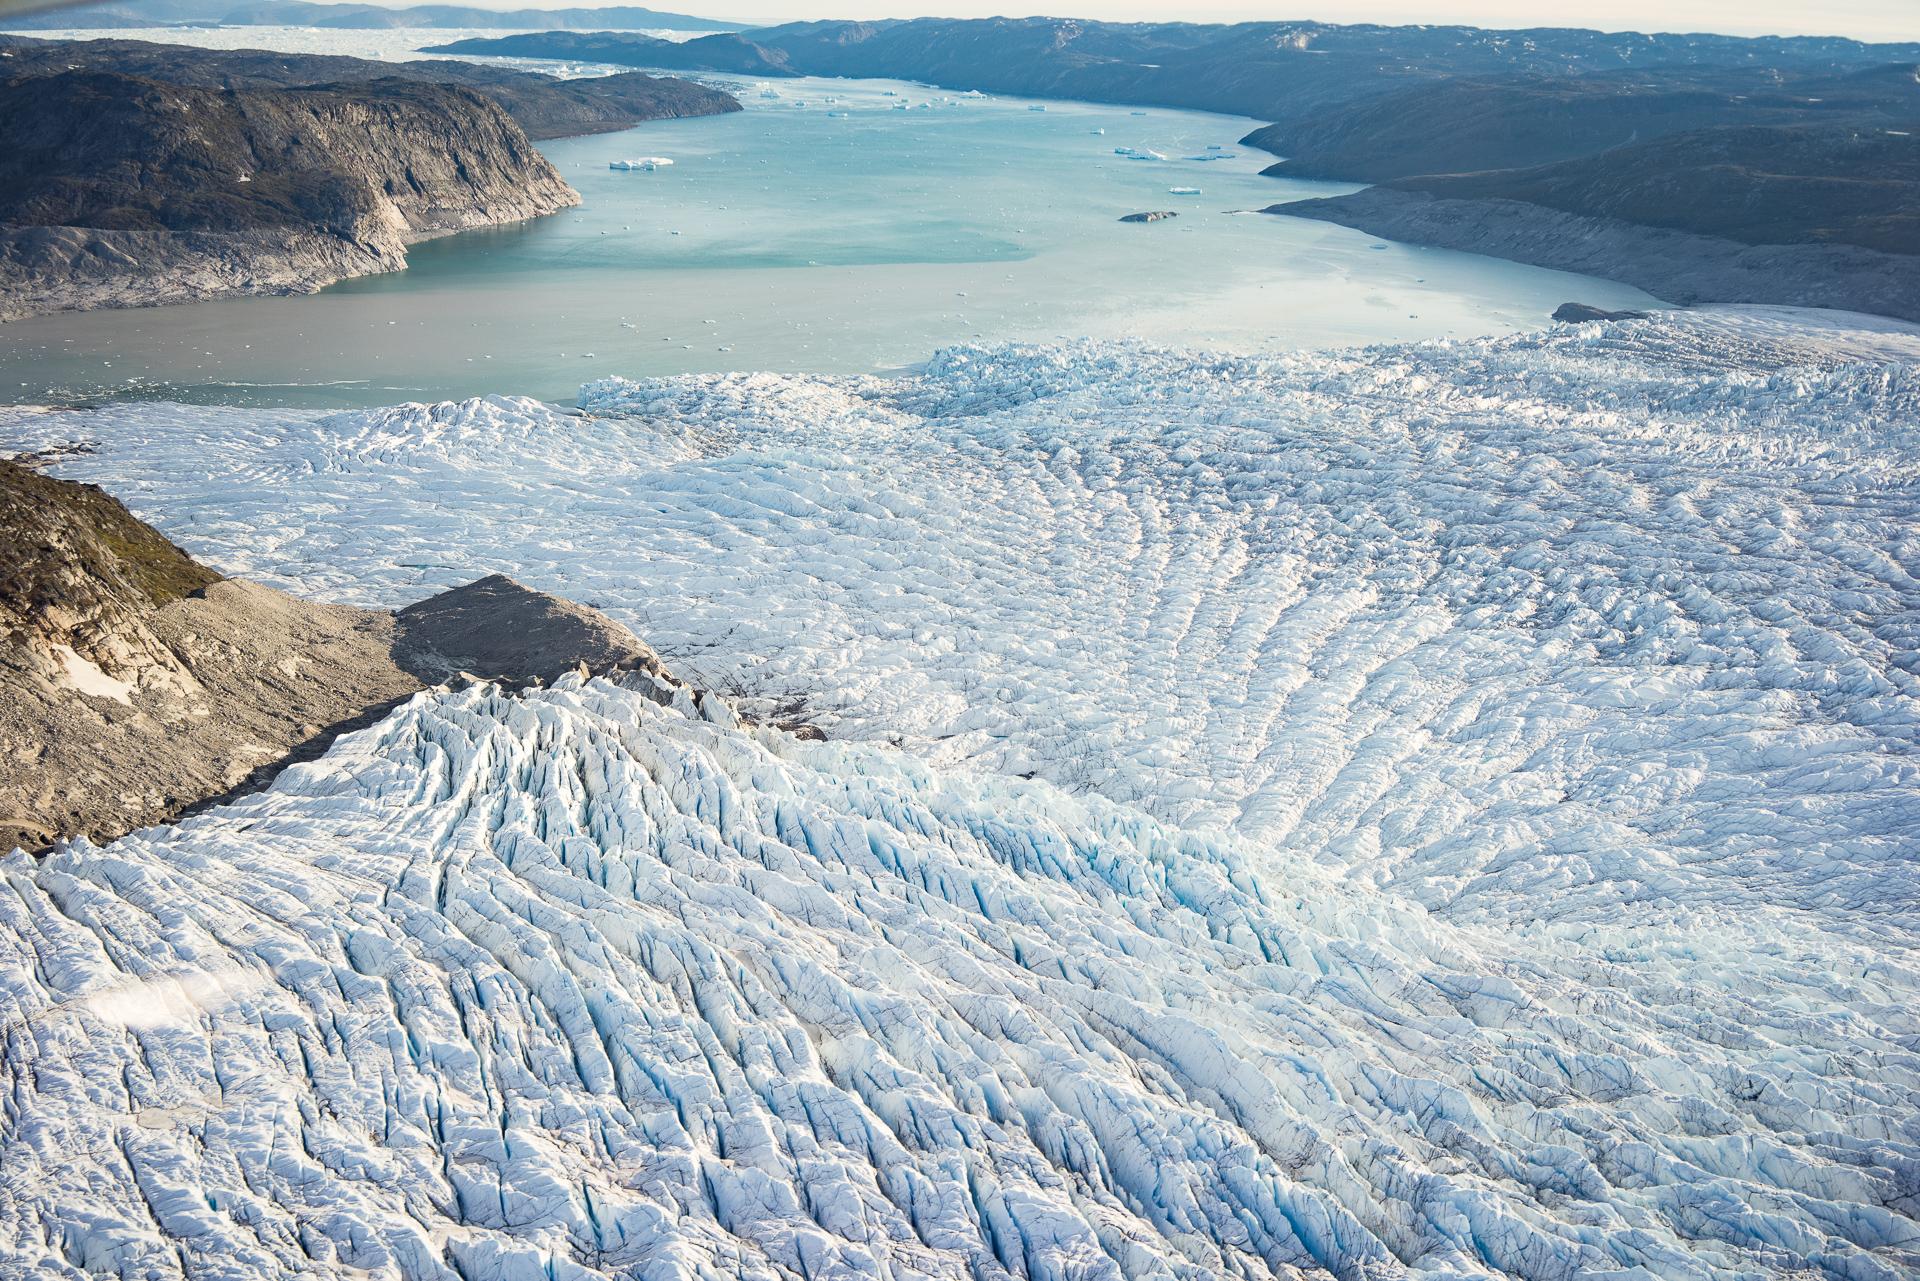 Le glacier de Sermeq Avannarleq survolé depuis l’avion d’Air Zafari, et, tout au fond, l’Isfjord. © DB / Yonder 